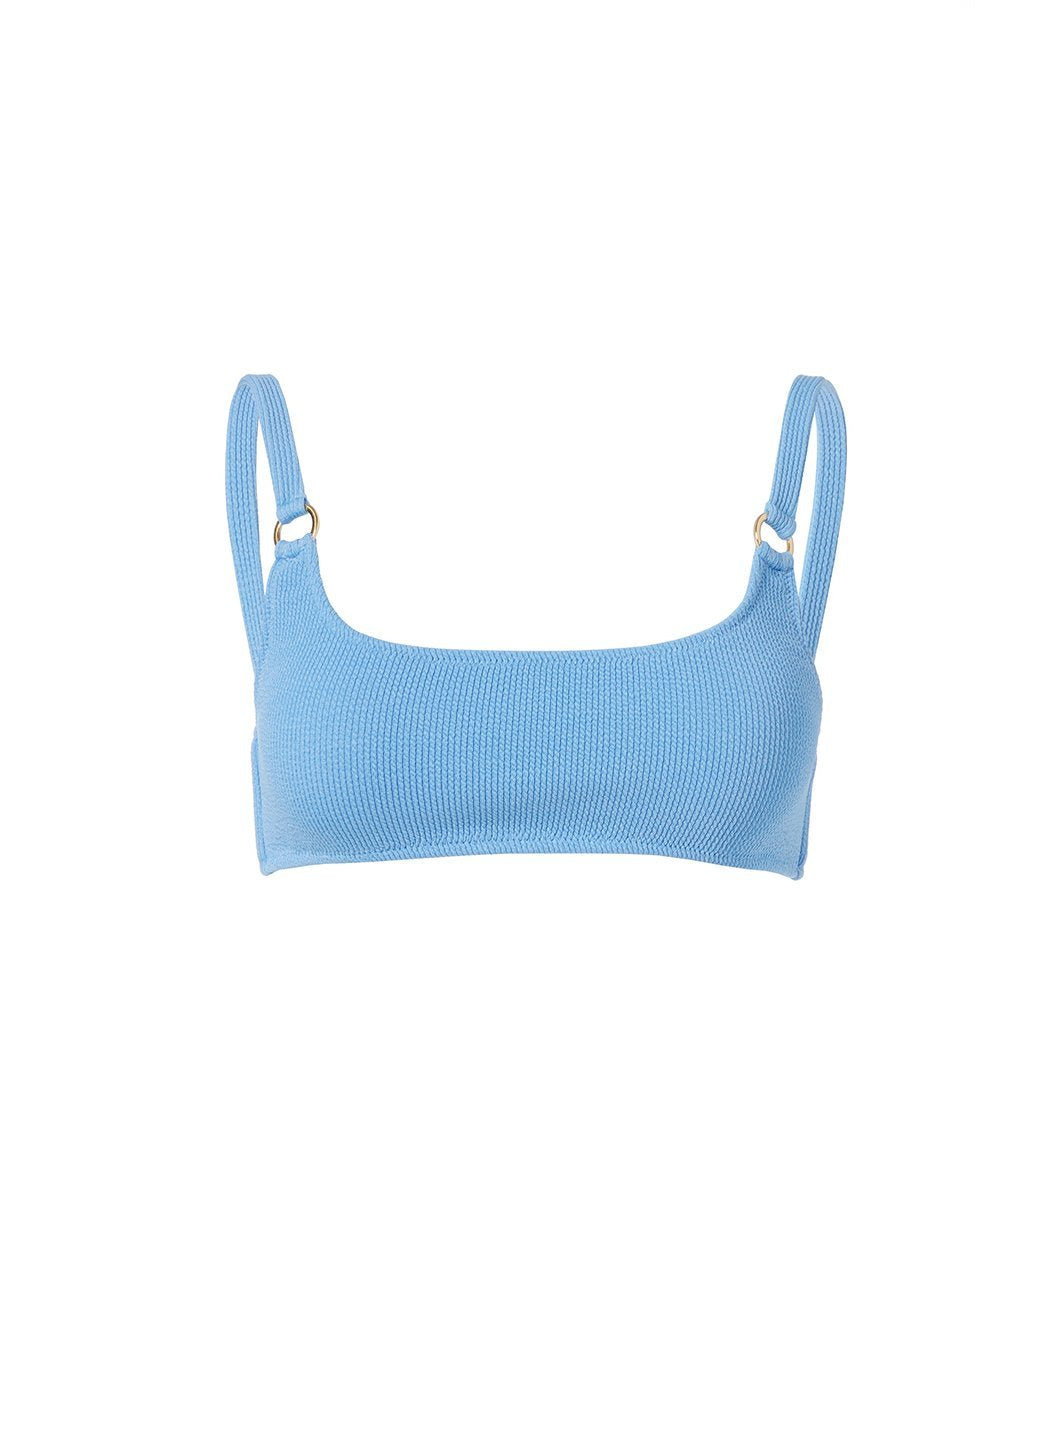 bari-blue-ridges-ring-trim-over-the-shoulder-bikini-top